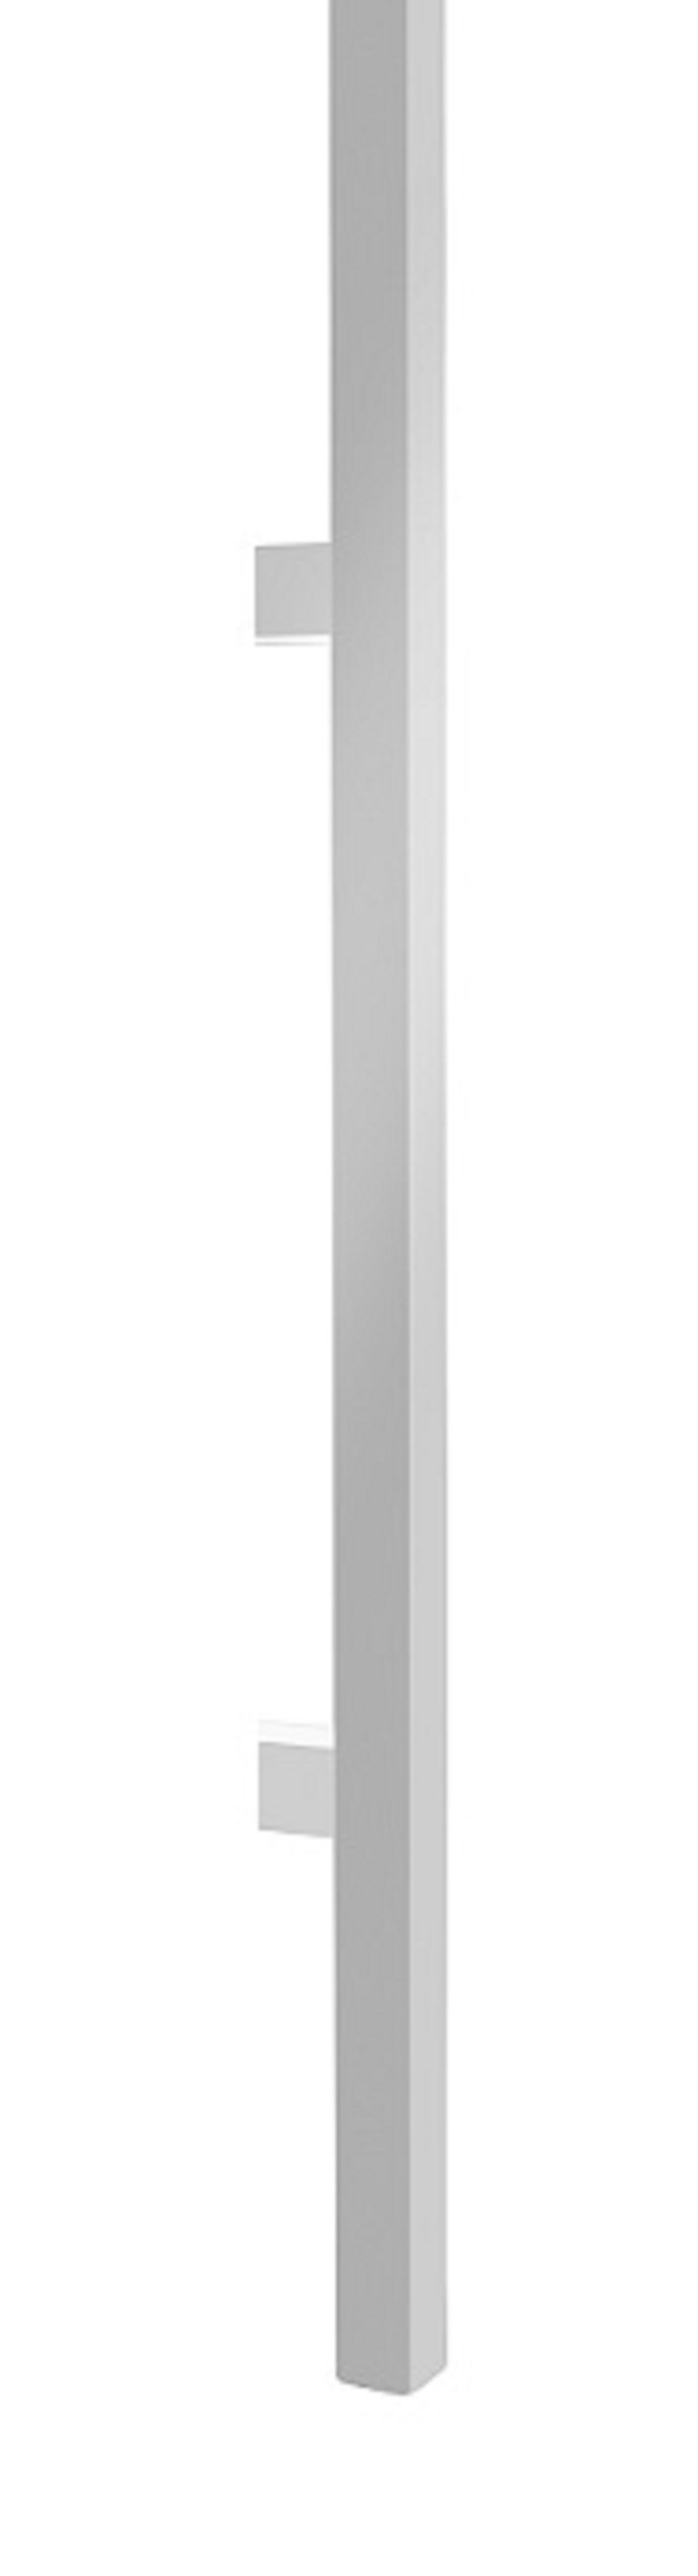 Manillón rectangular inox 600mm 380mm epoxi blanco